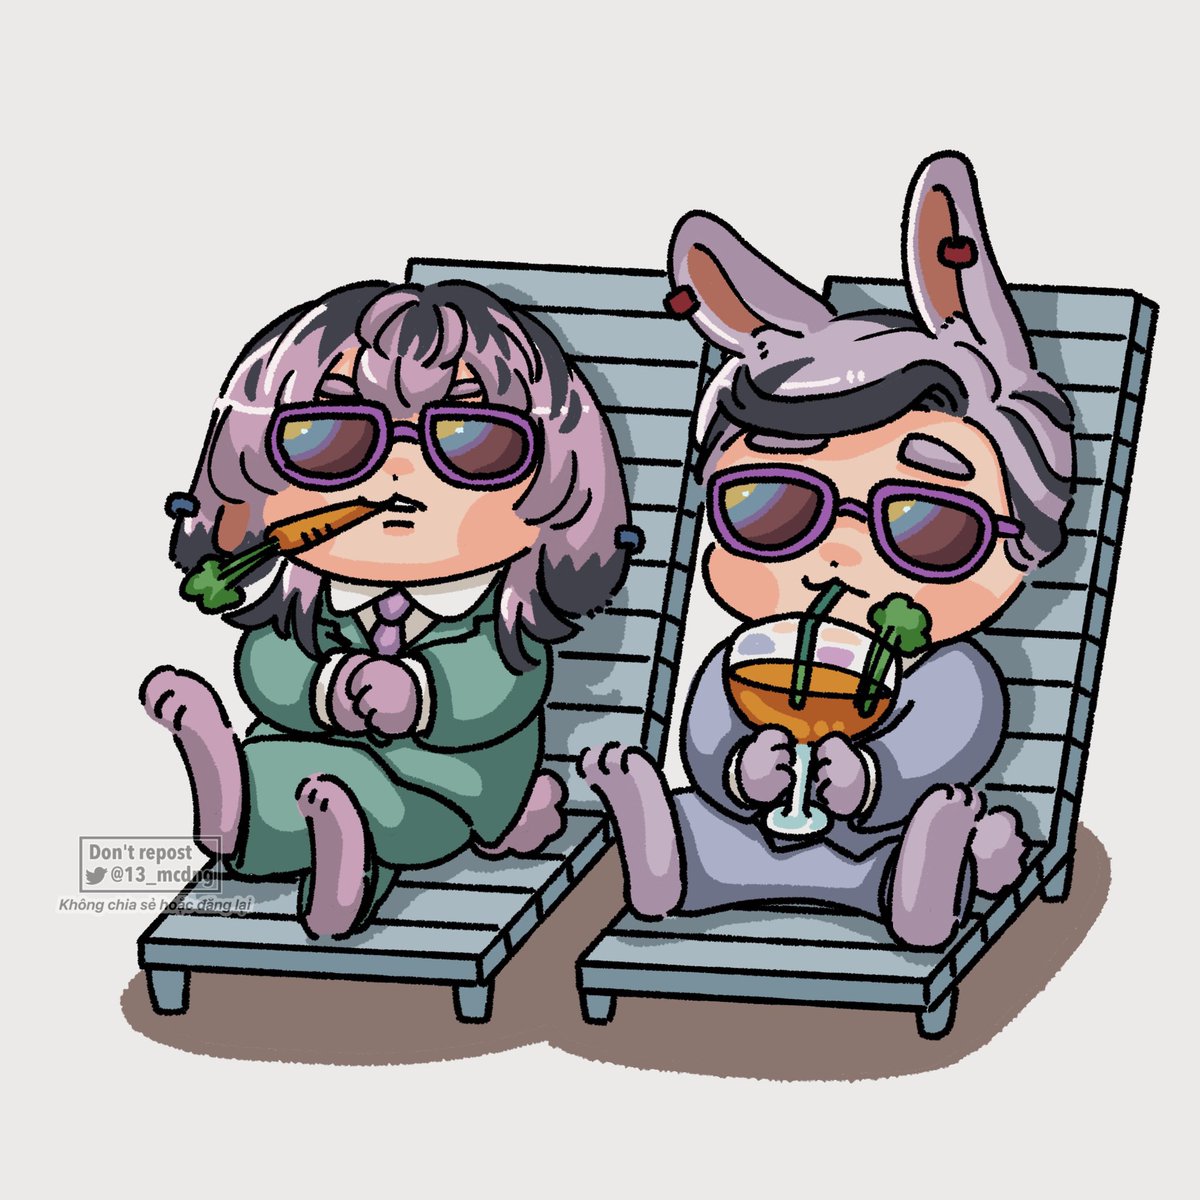 carrot animal ears sunglasses rabbit ears drinking straw sitting necktie  illustration images